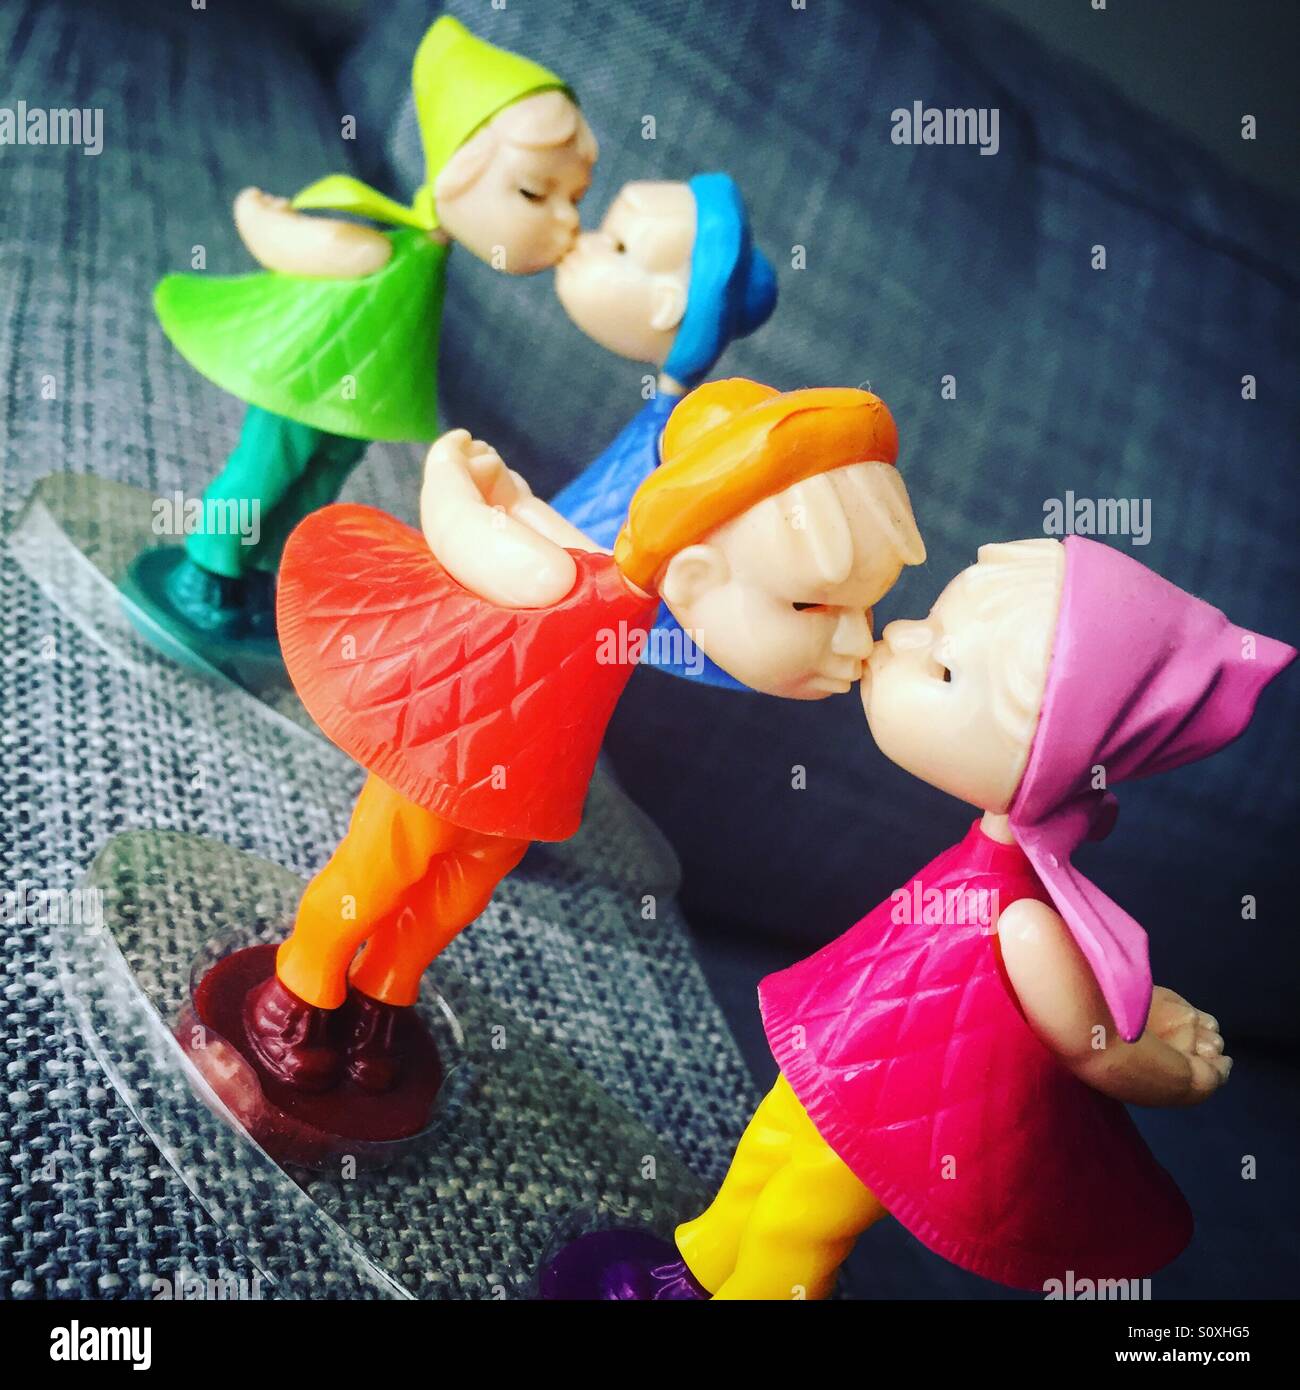 Küssende Puppen II Stockfotografie - Alamy